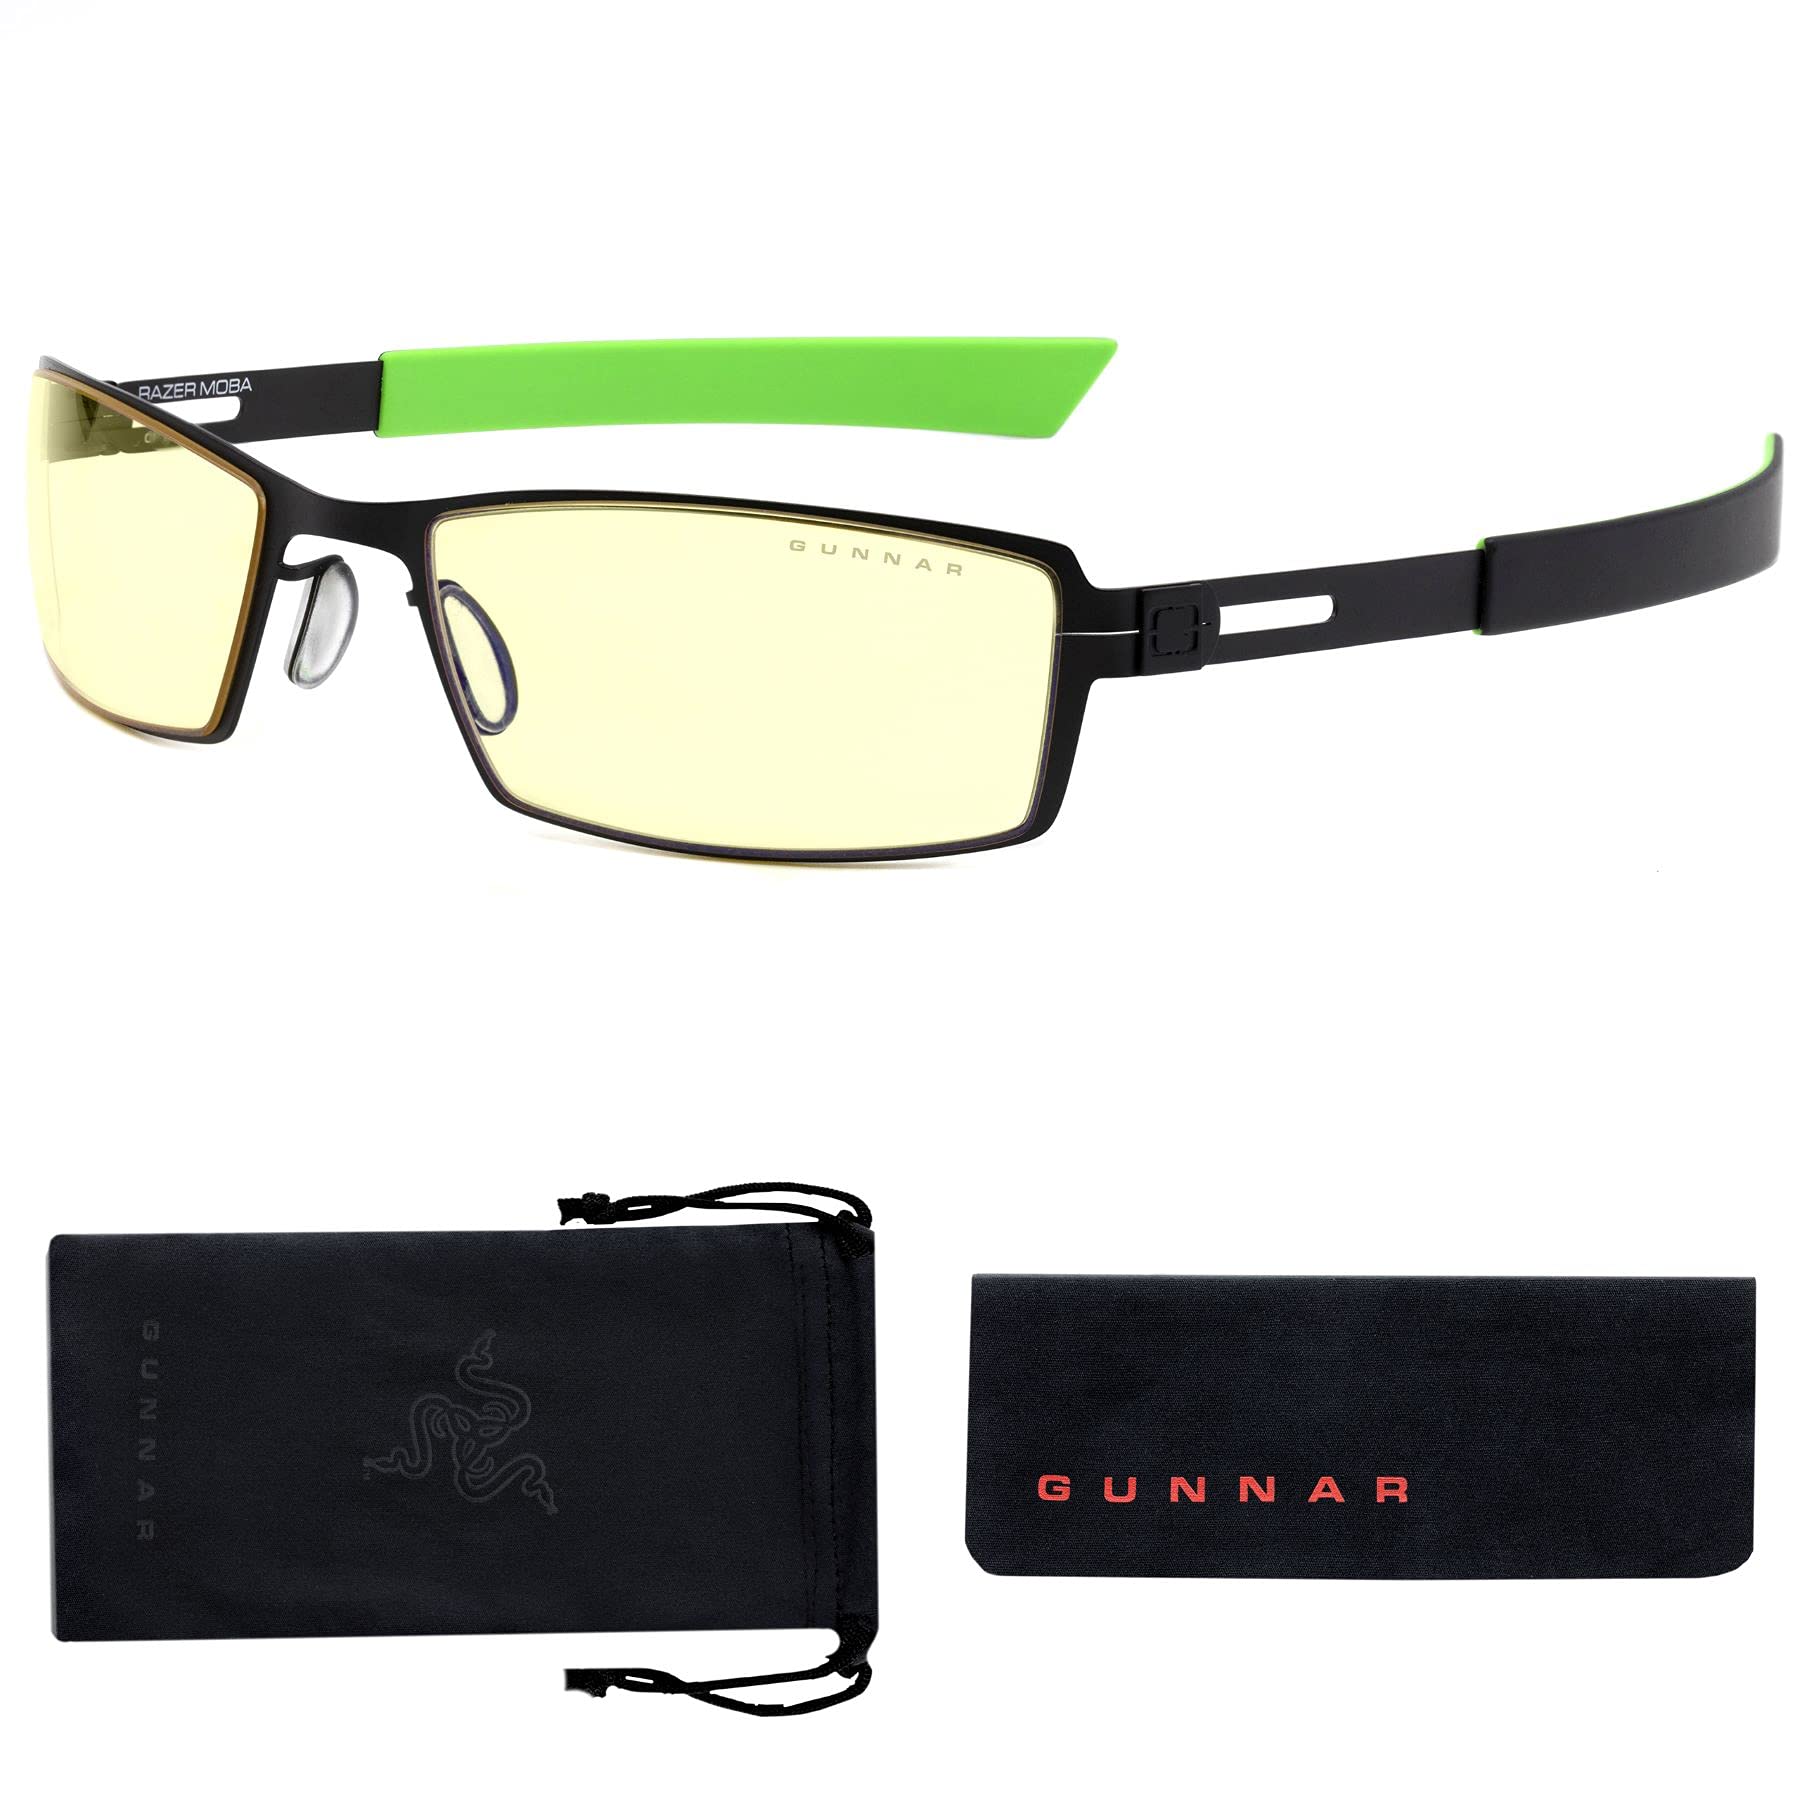 GUNNAR - Premium Gaming and Computer Glasses for Kids (age 12+) - Blocks 65% Blue Light - MOBA Razer Edition, Onyx, Amber Tint